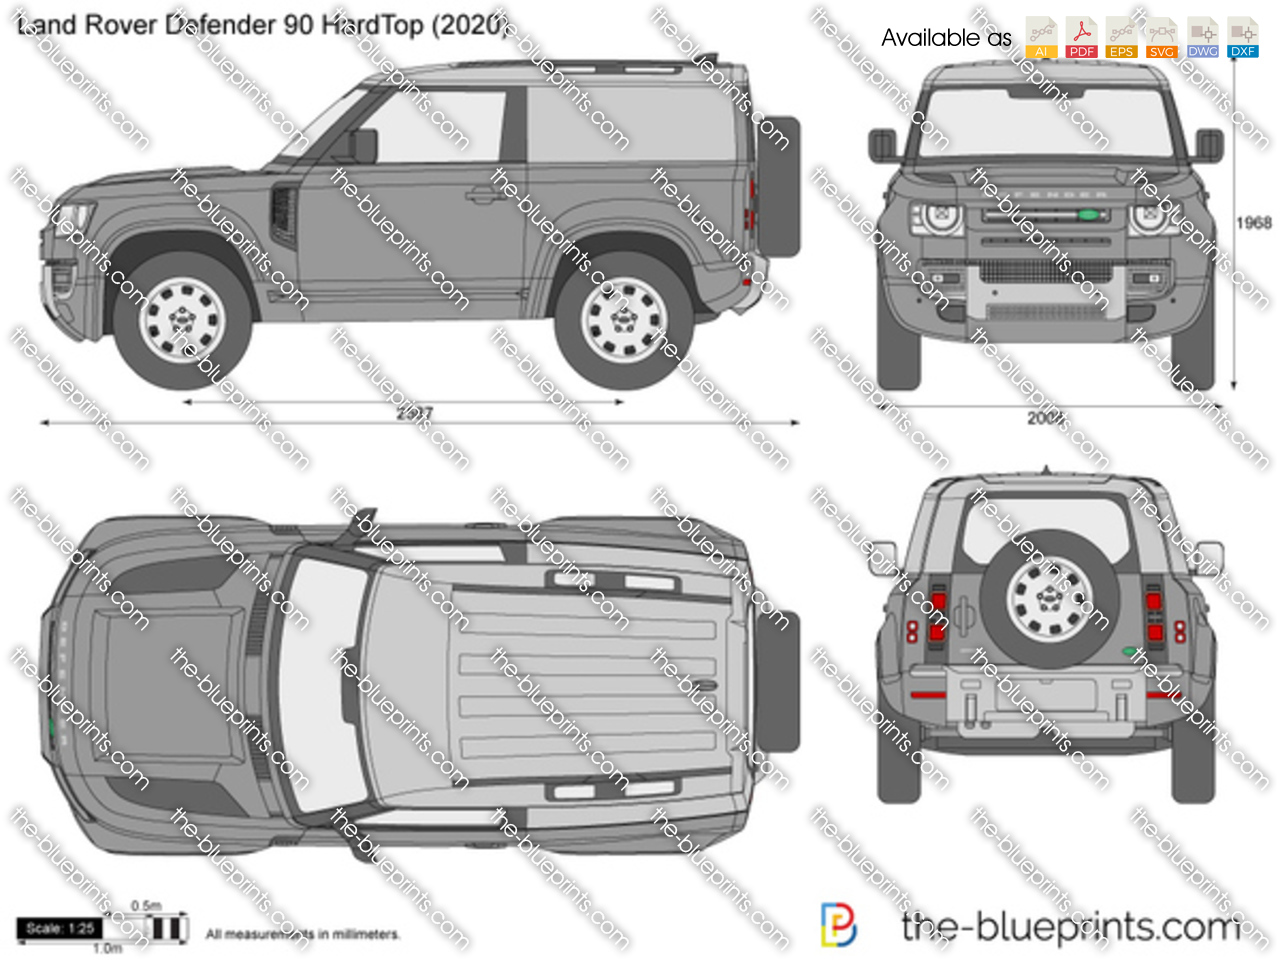 Land Rover Defender 90 HardTop